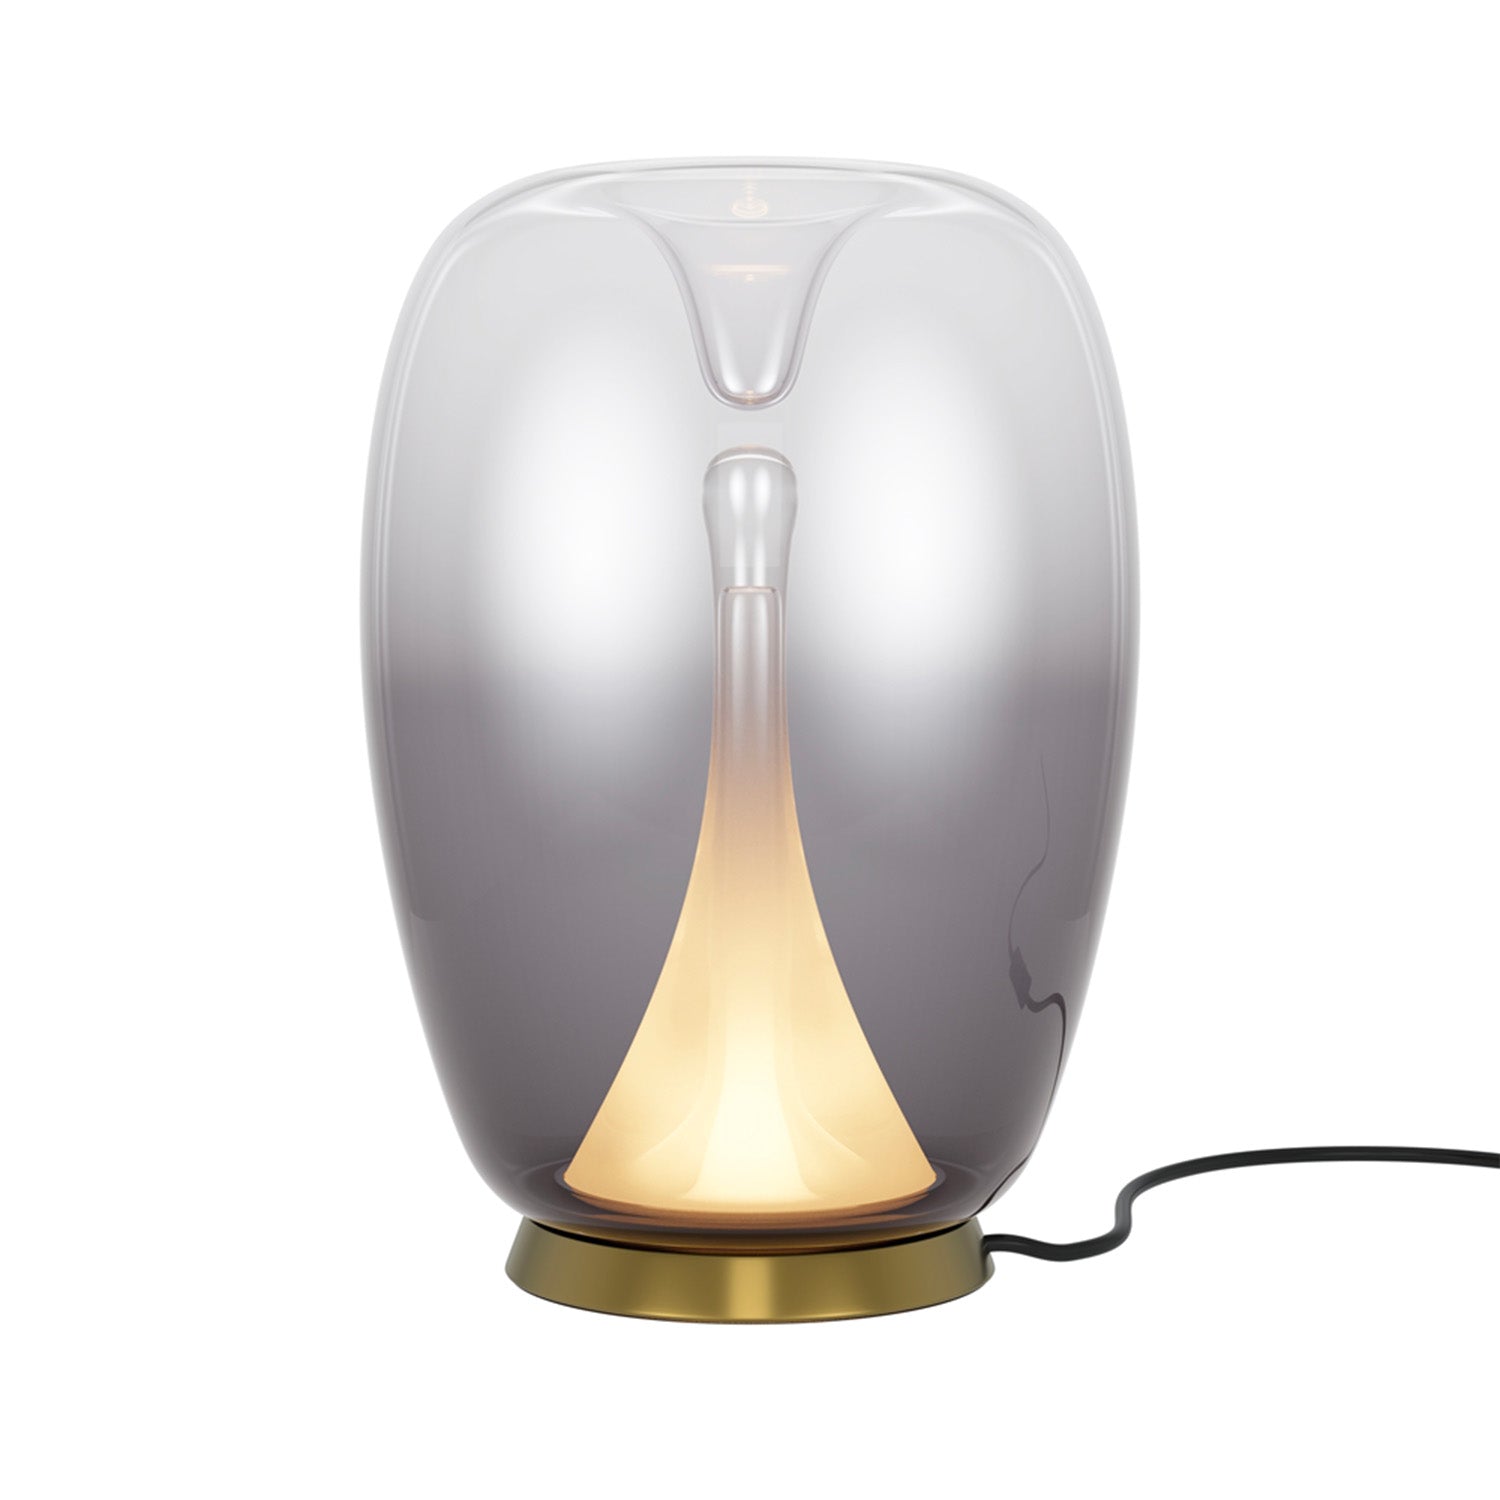 SPLASH - Designer glass table lamp with integrated LED